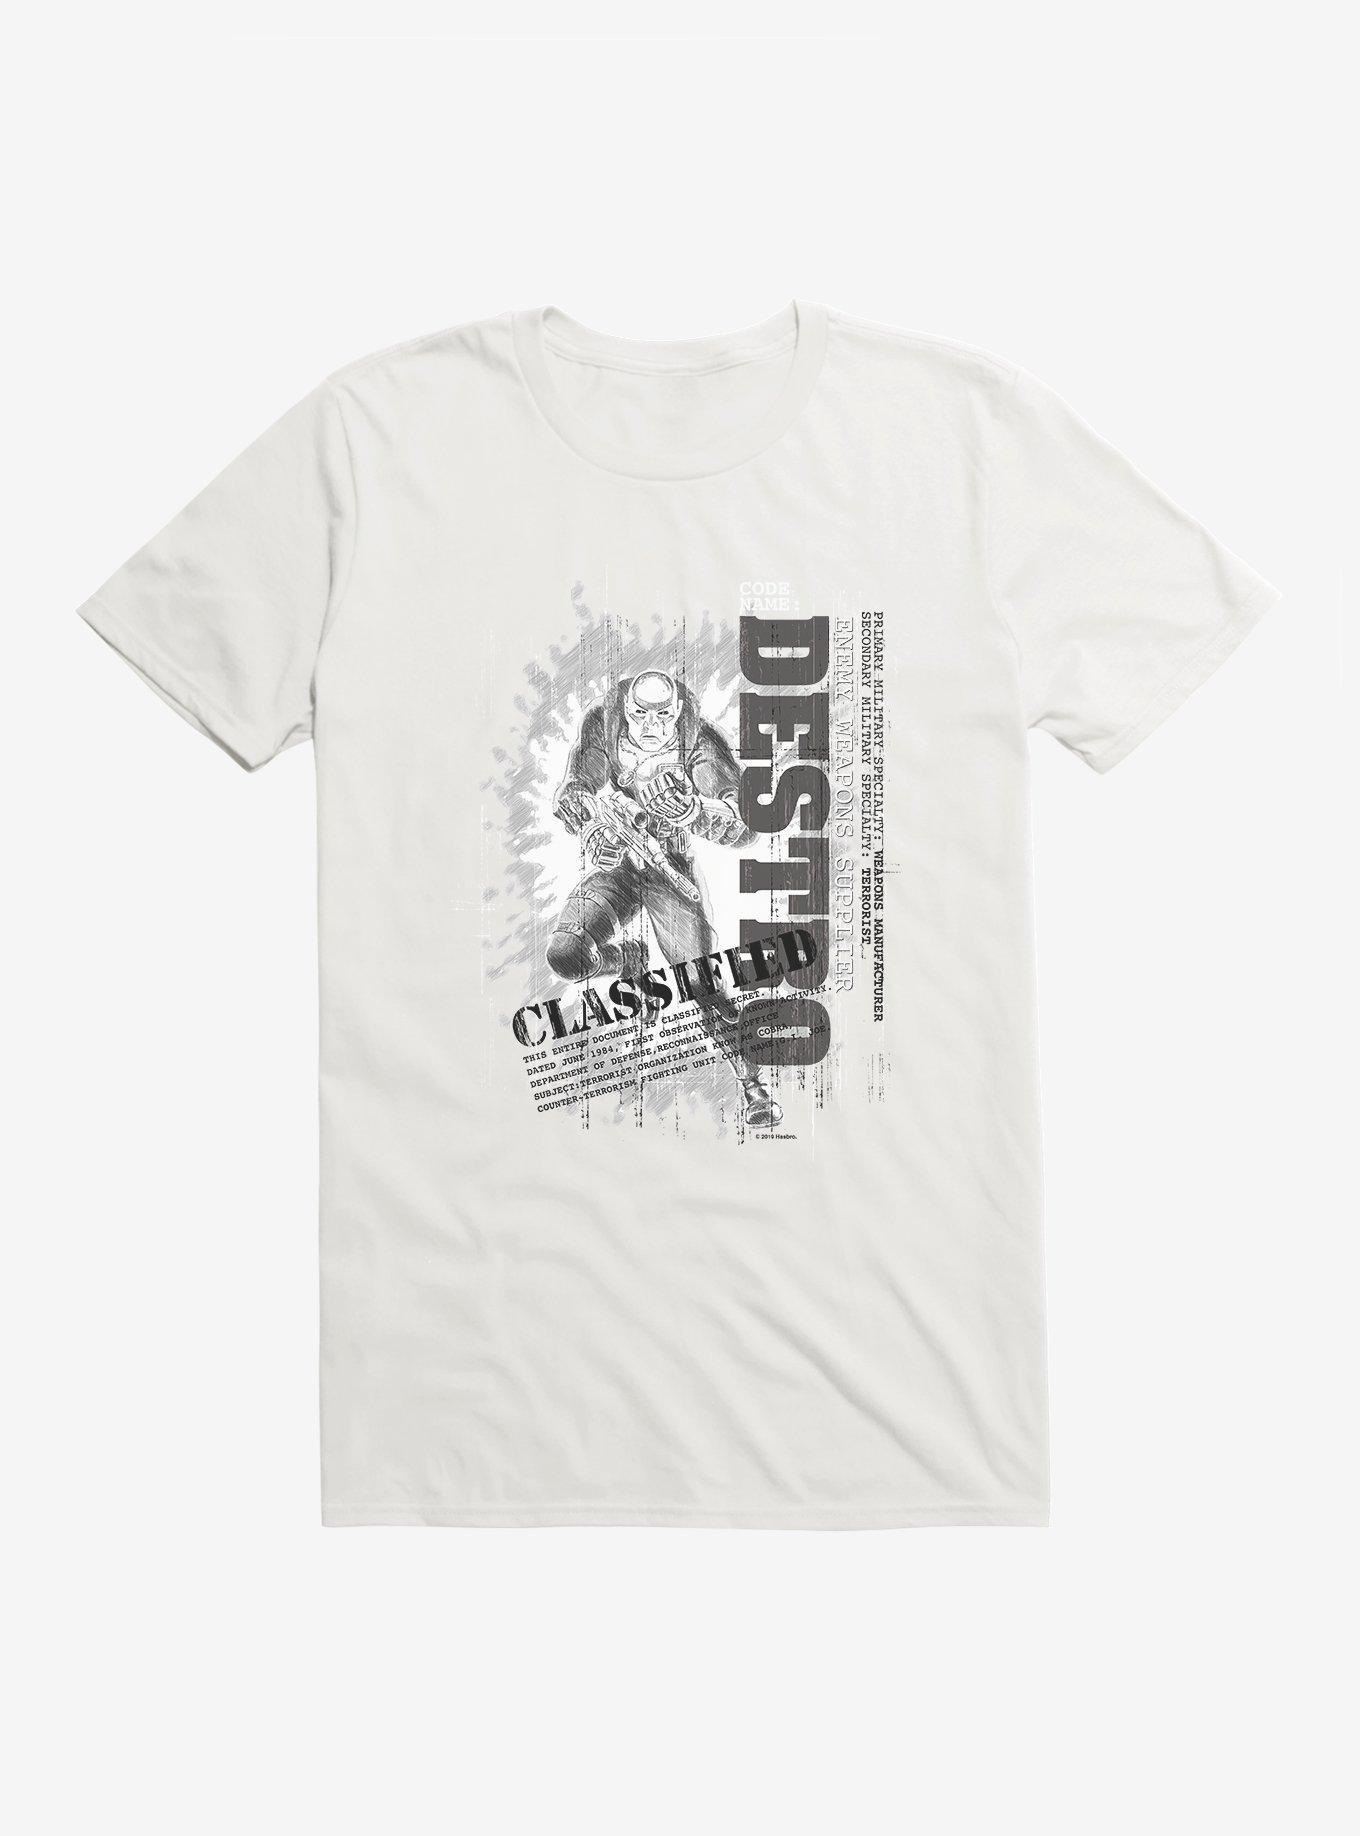 G.I. Joe Classified Destro T-Shirt